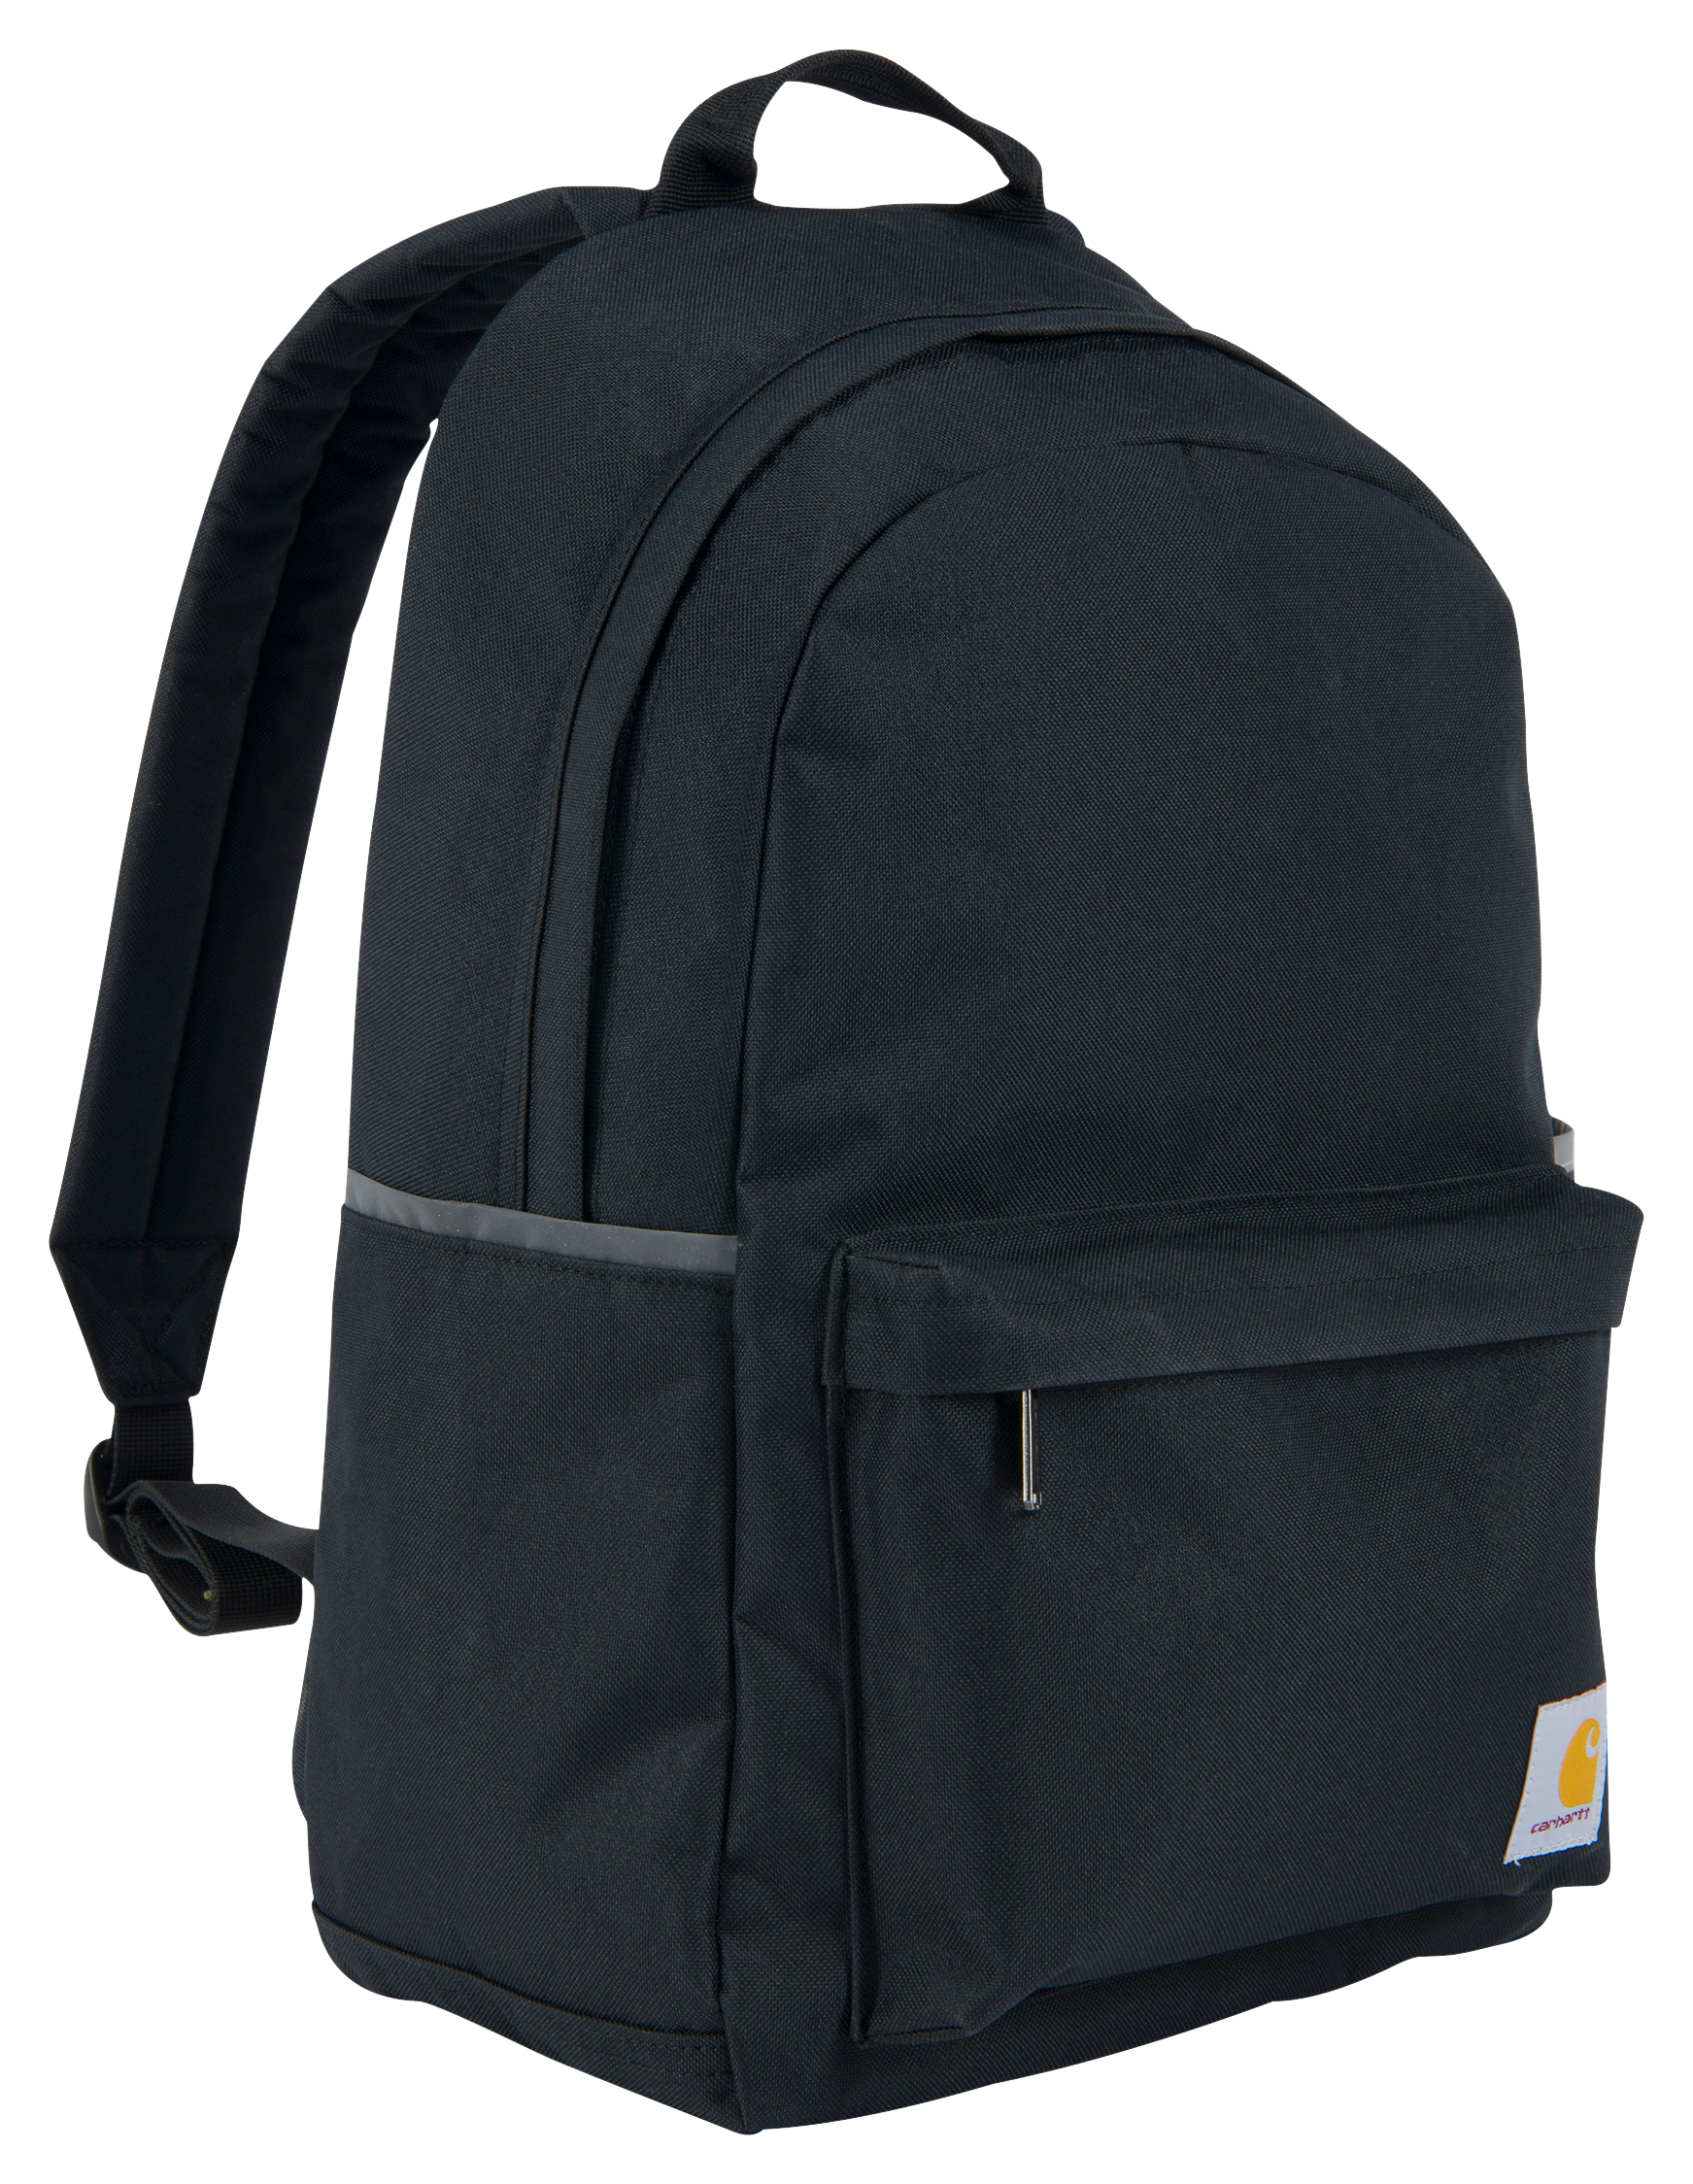 Carhartt 21L Classic Backpack - Black